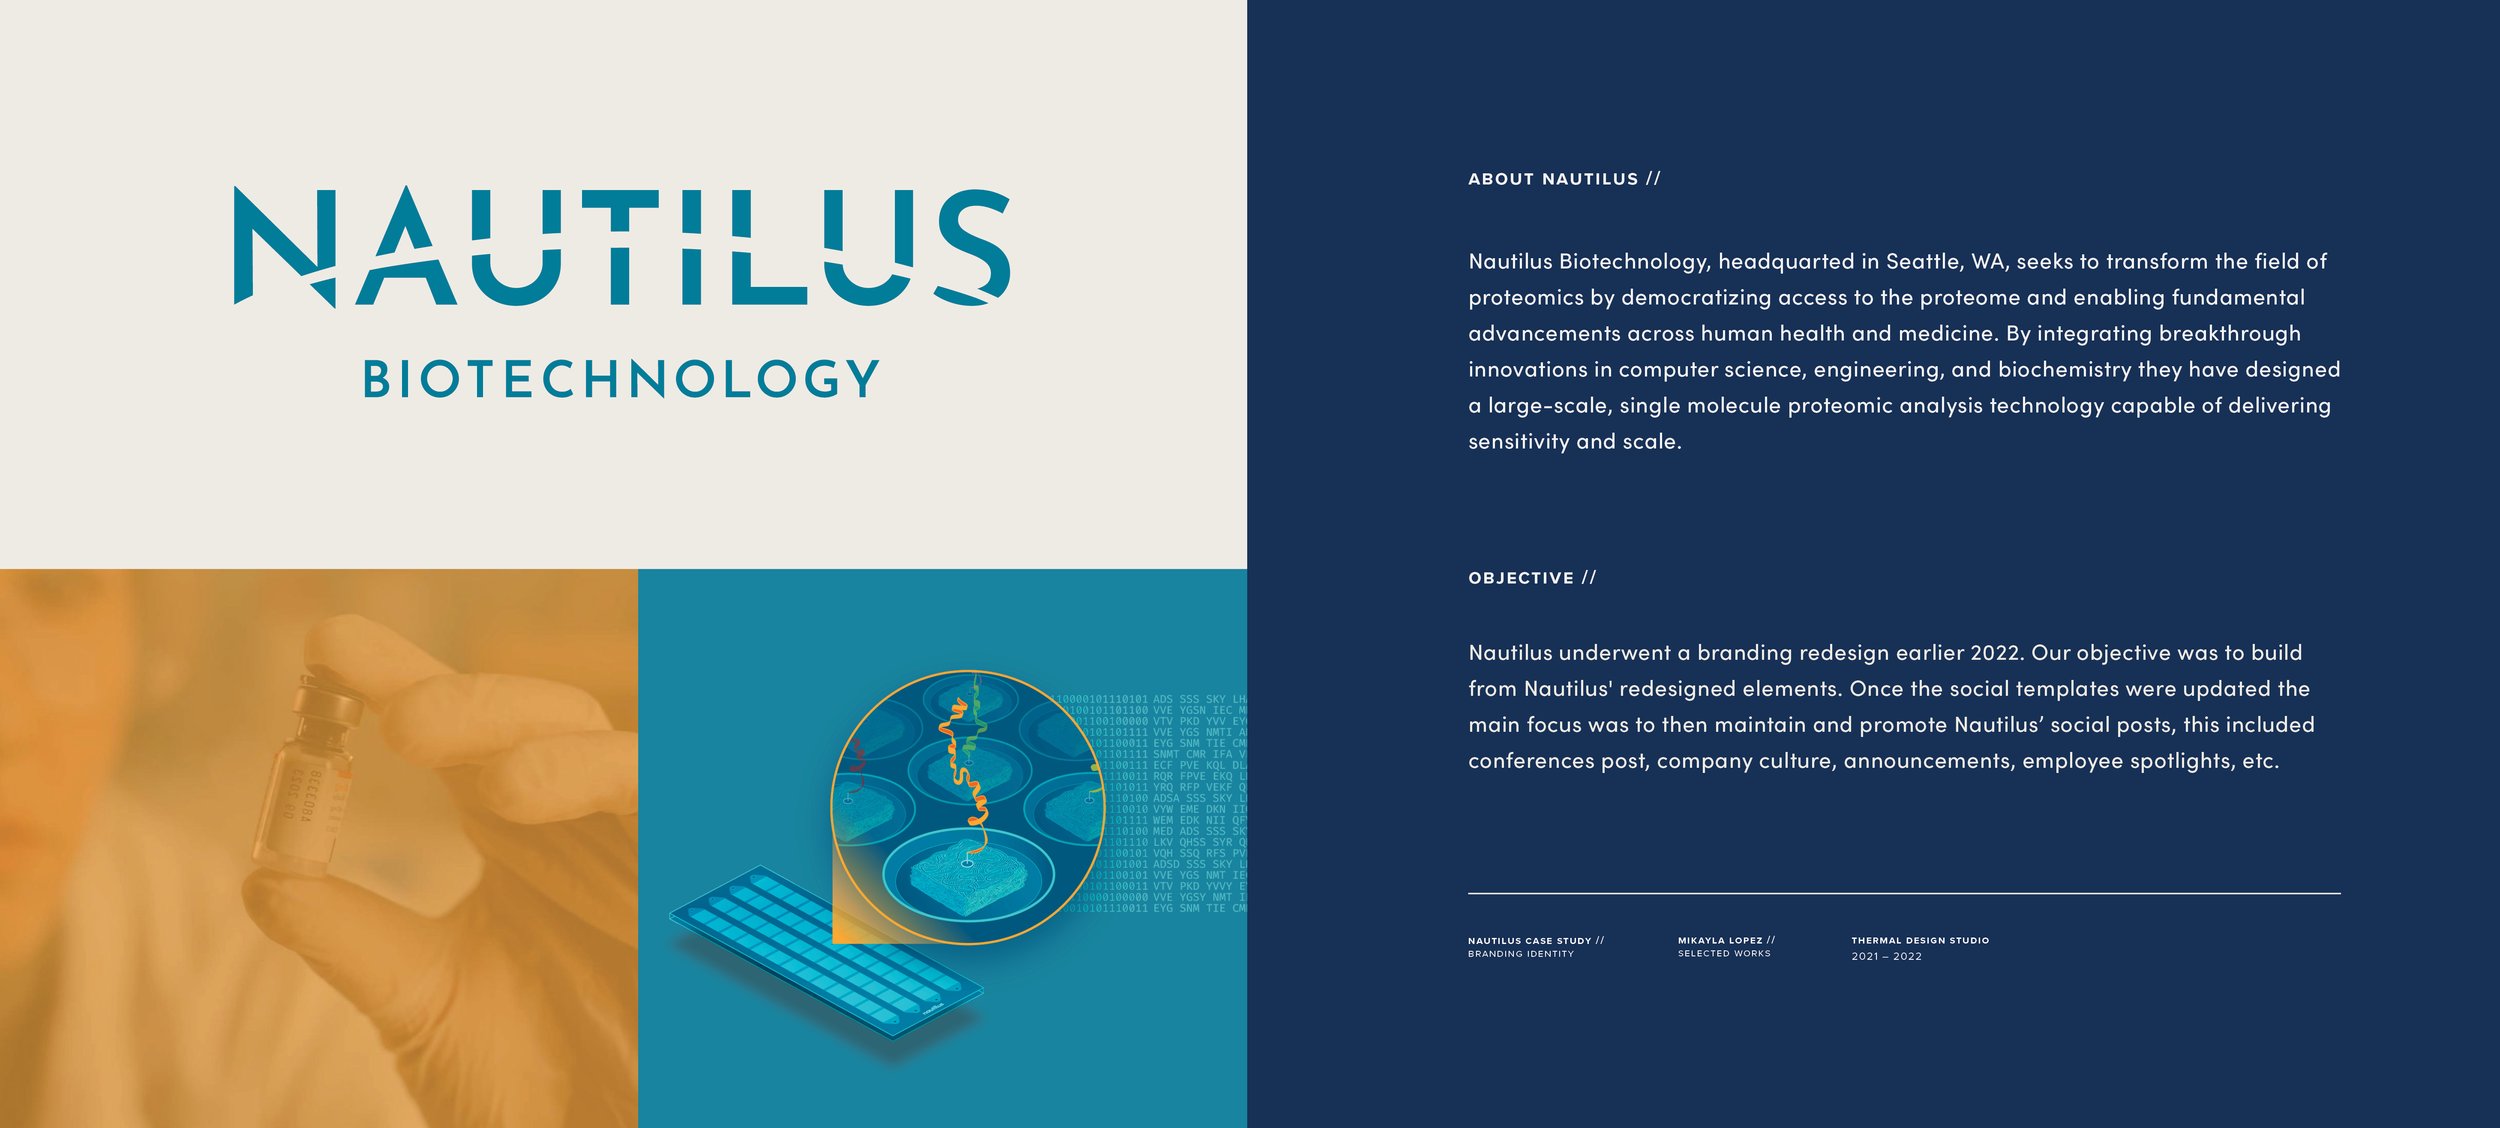 Nautilus Biotechnology — mikayla lopez